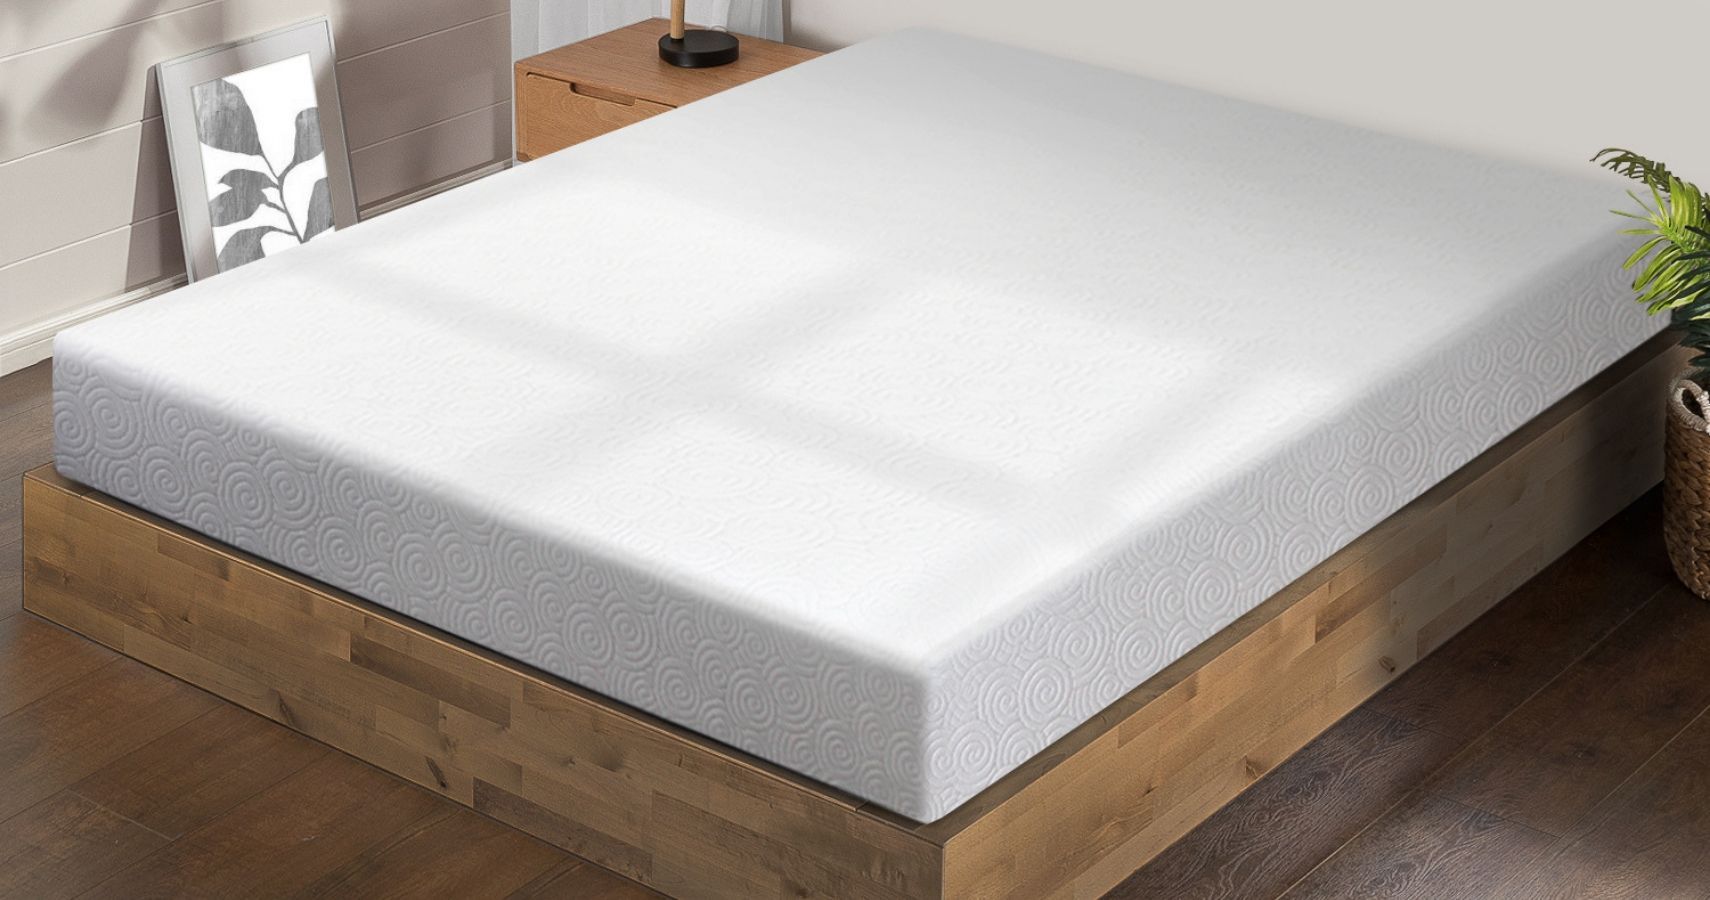 foam by mail diy mattress